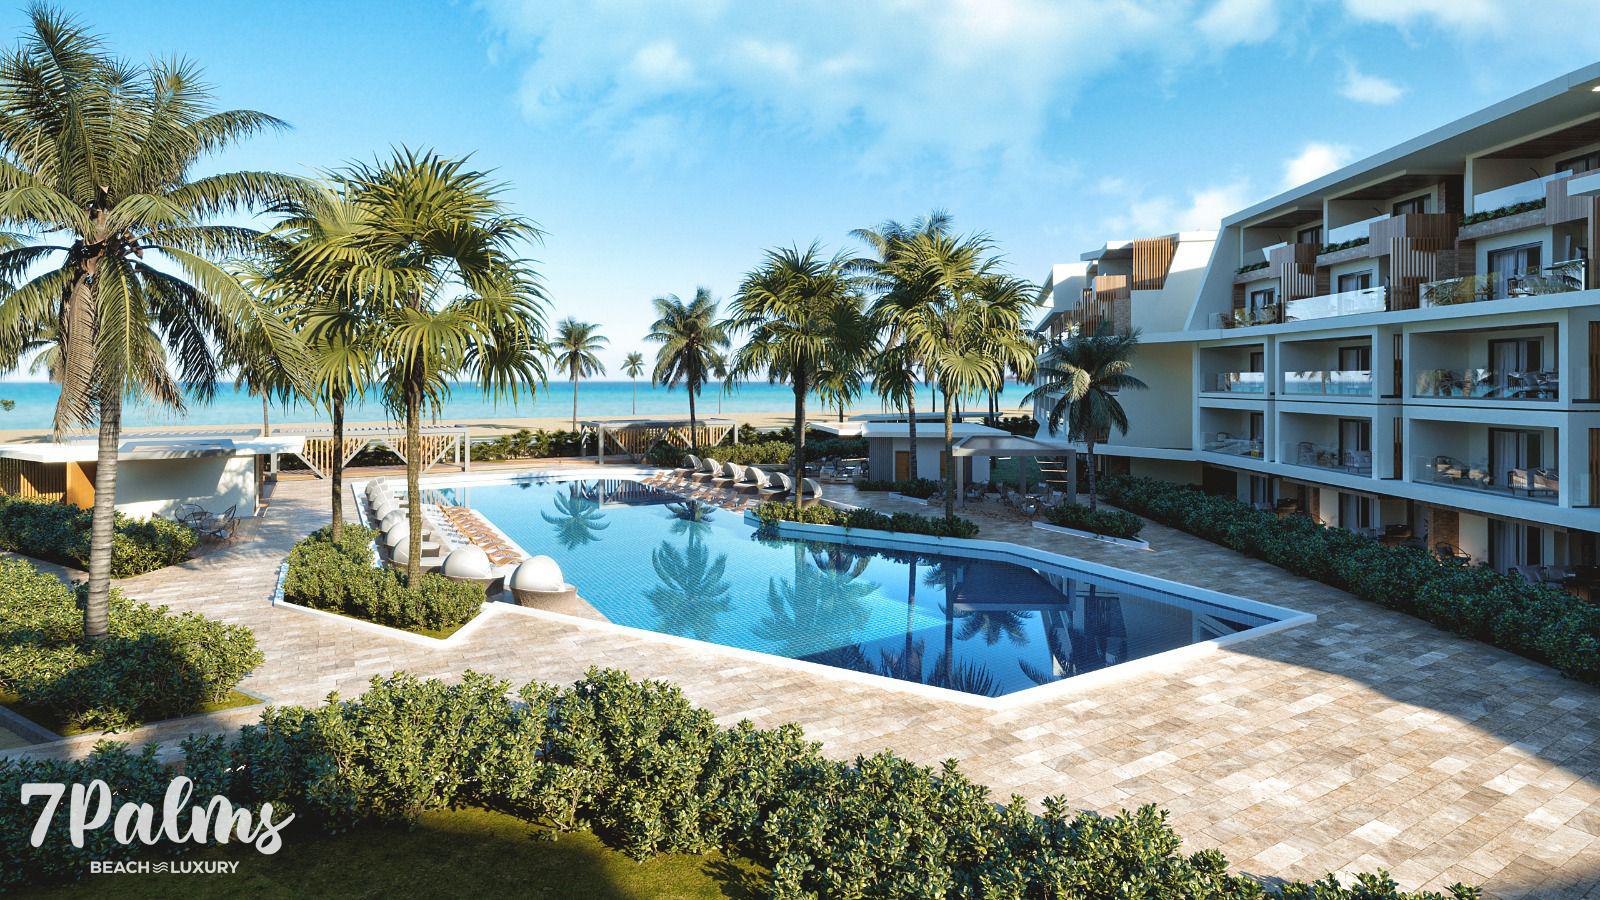 apartamentos - 7 Palms Beach Luxury Espectacular Proyecto en Venta Punta Cana.